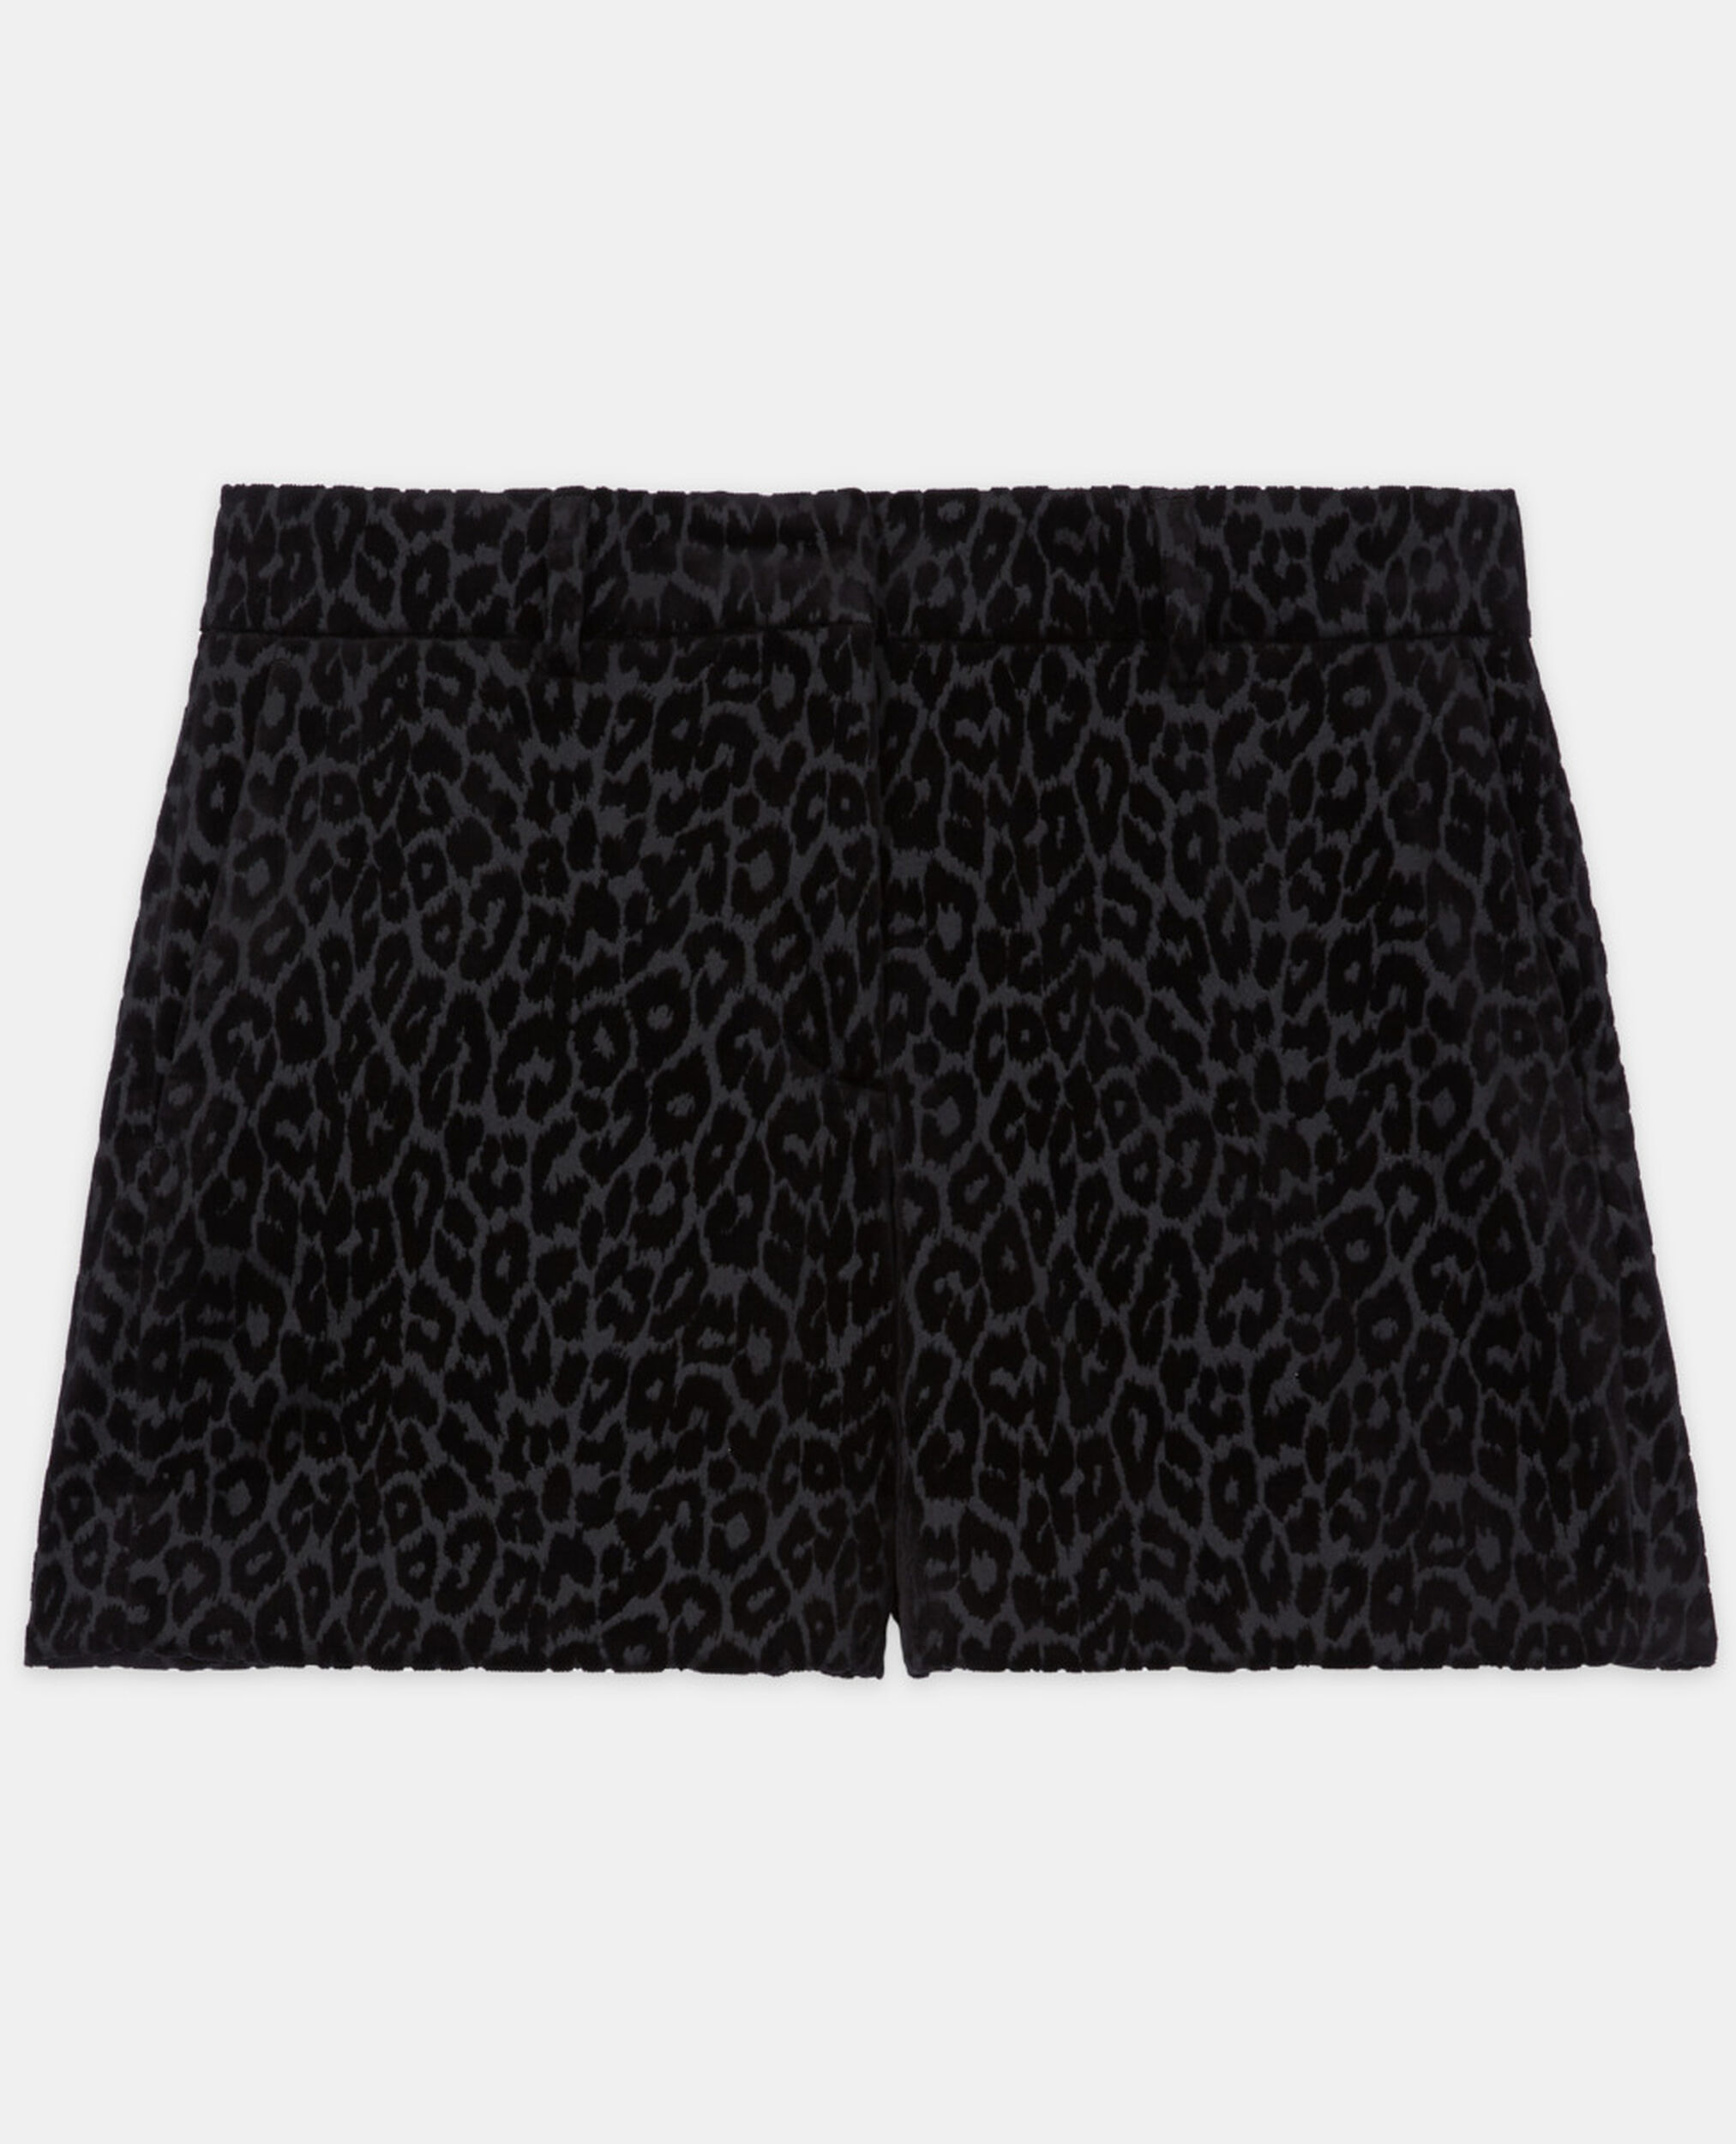 Pantalones cortos terciopelo leopardo negros, BLACK, hi-res image number null